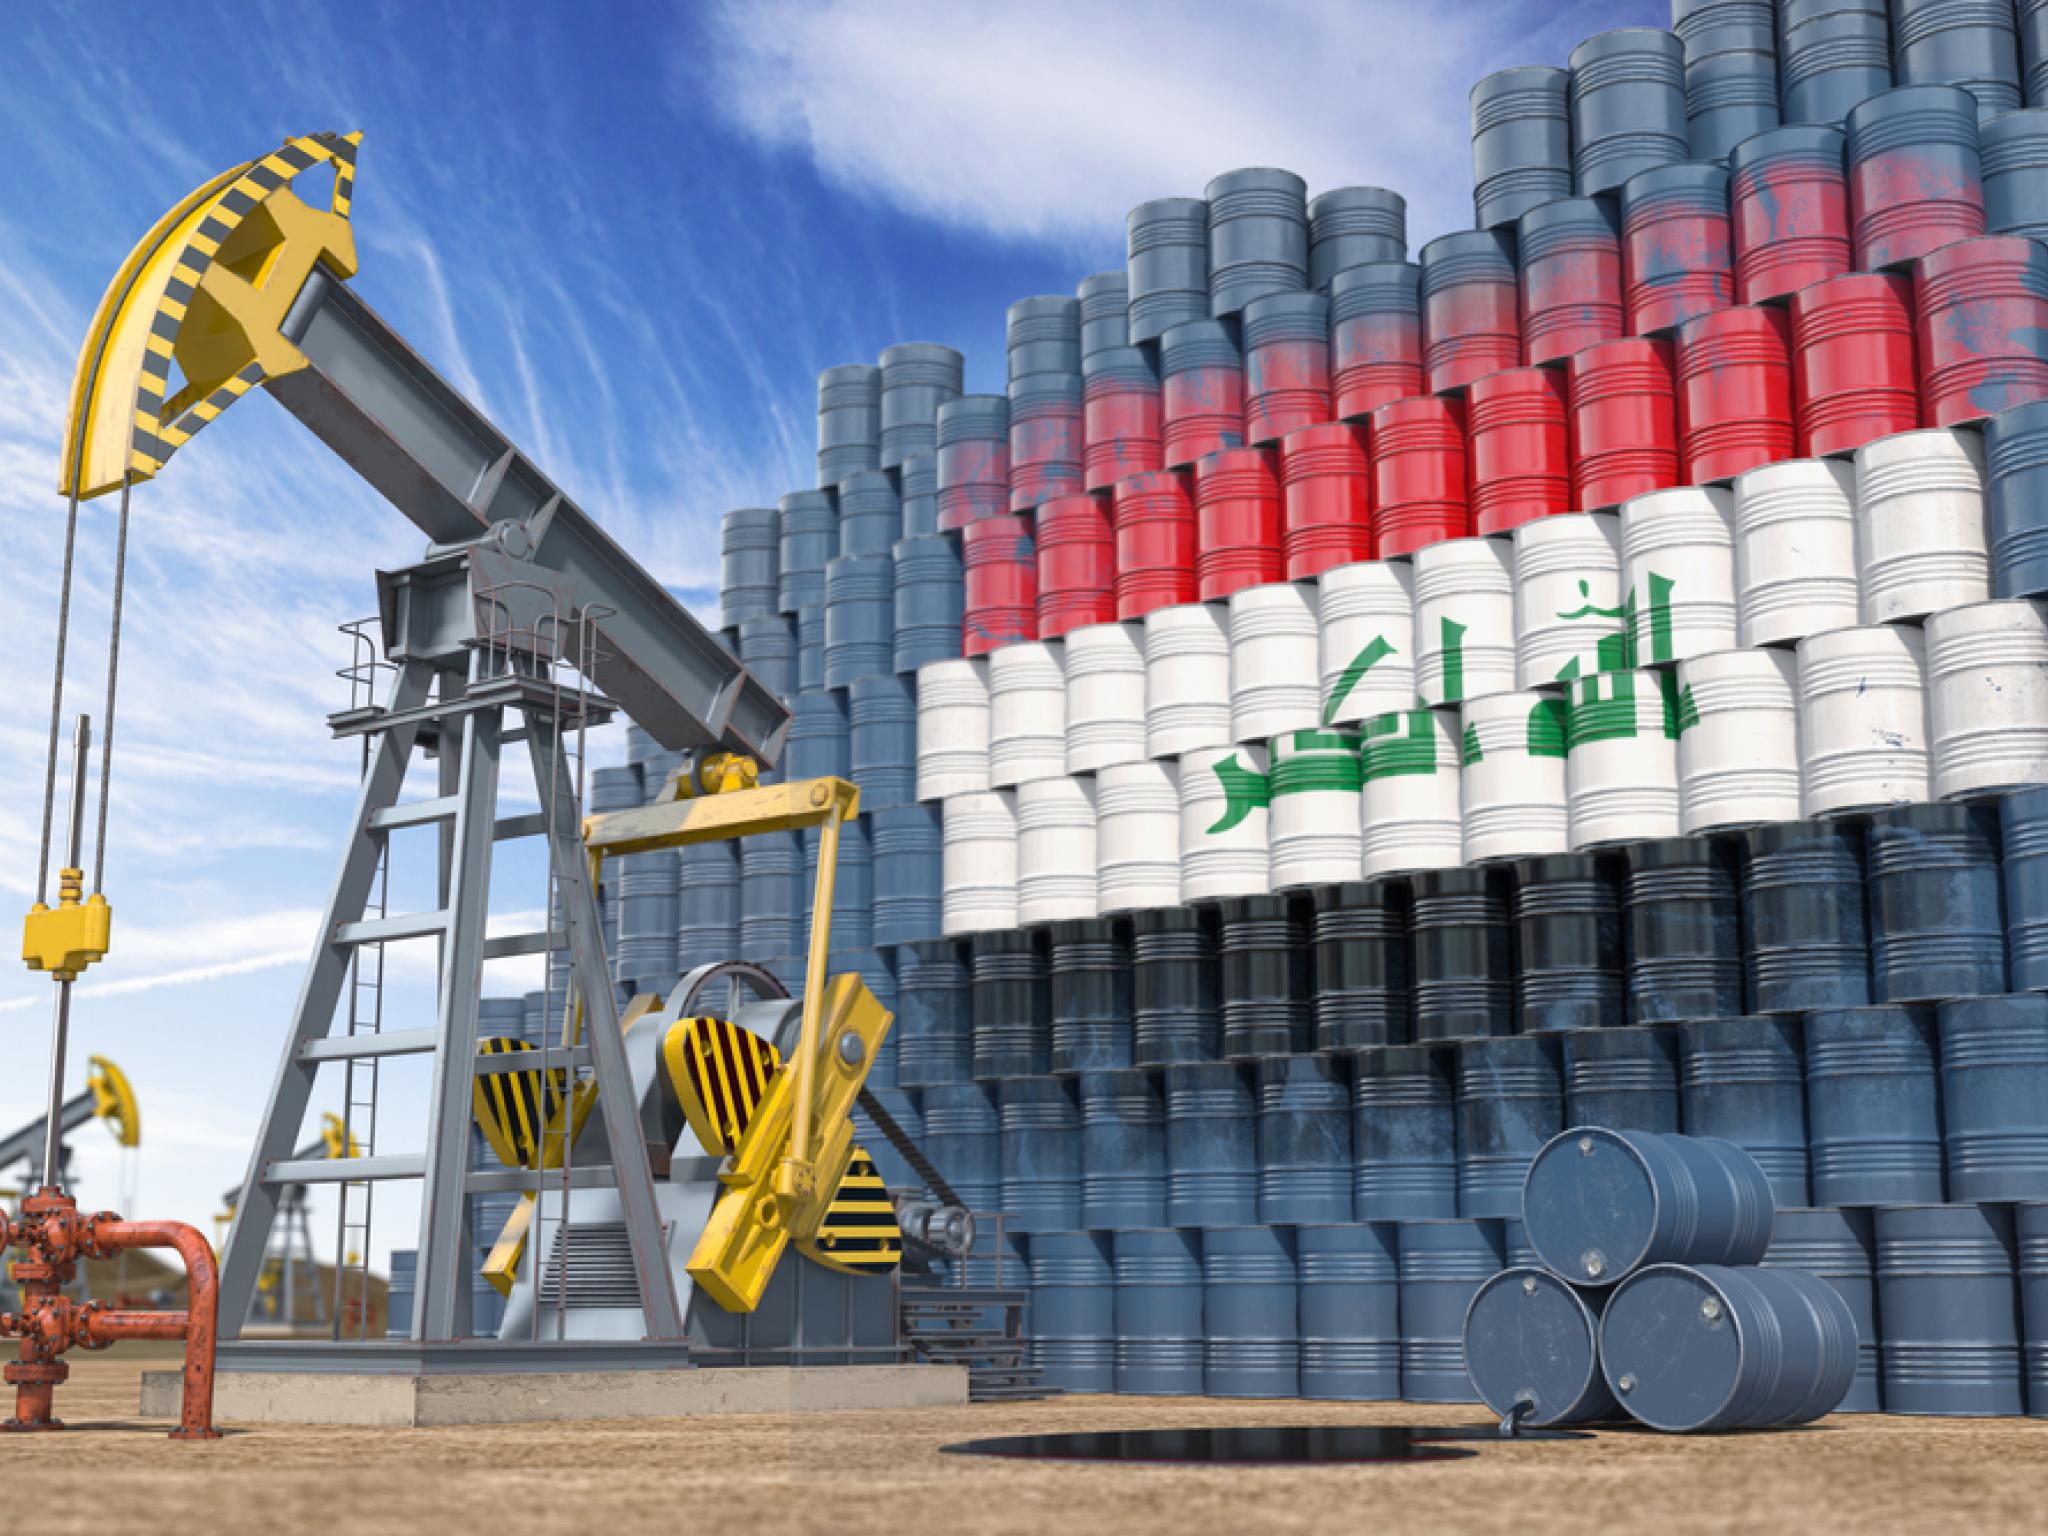  iraq-to-resume-oil-exports-to-turkey-via-pipeline-shuttered-a-decade-ago-amid-kurdish-negotiation-deadlock 